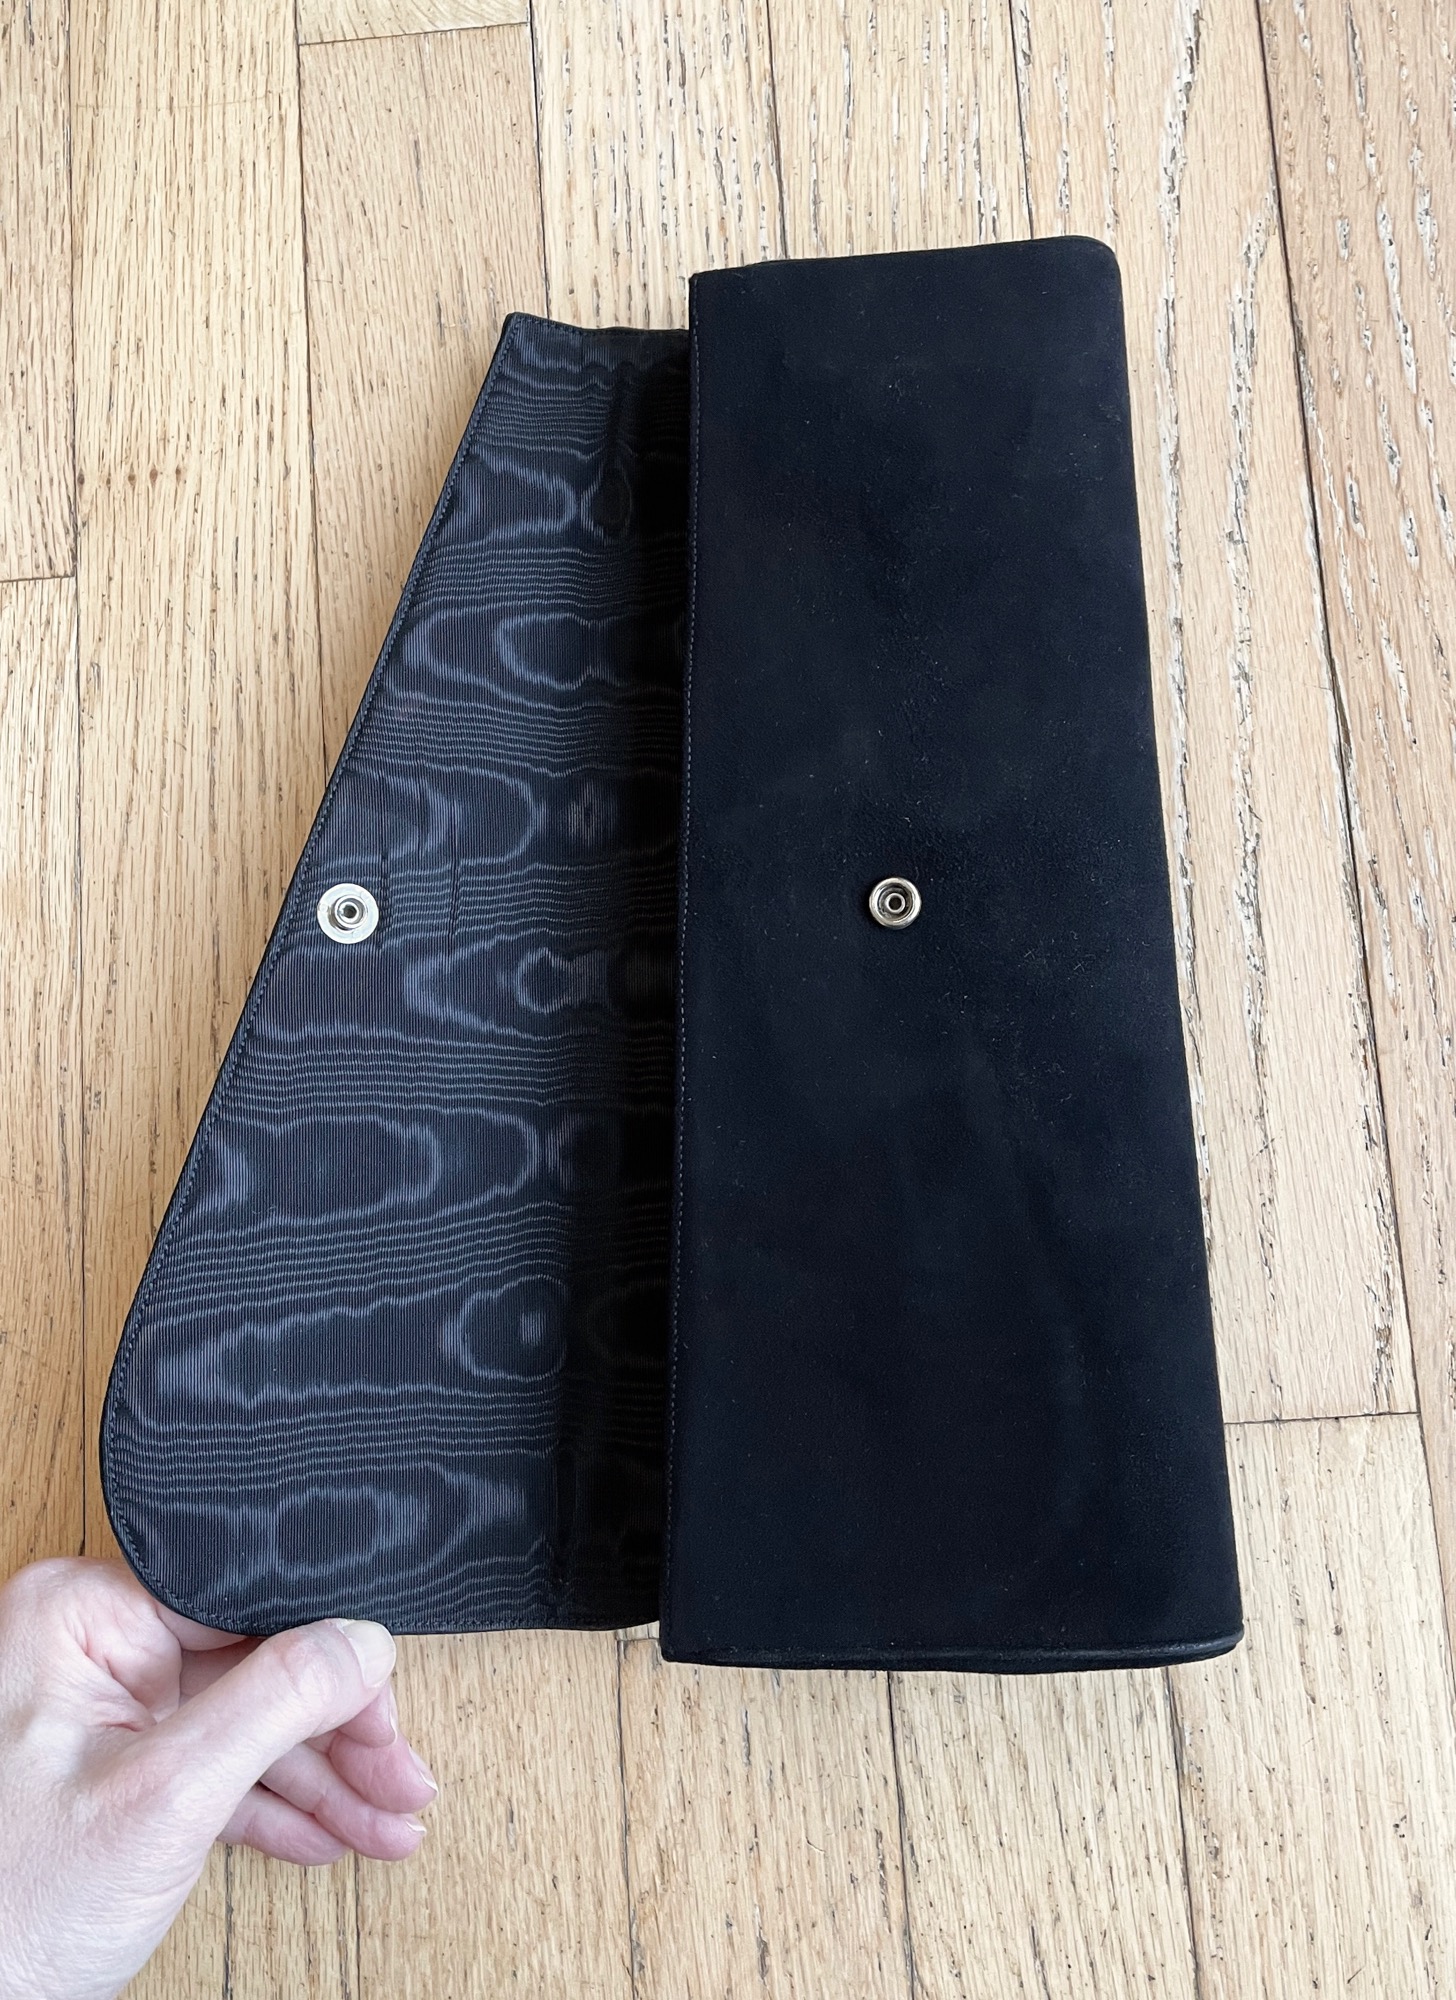 Urban Gypsy Design Oxford Clutch Handbag in Peony Print and Restoration Black Color, Artisan Designer Handbags